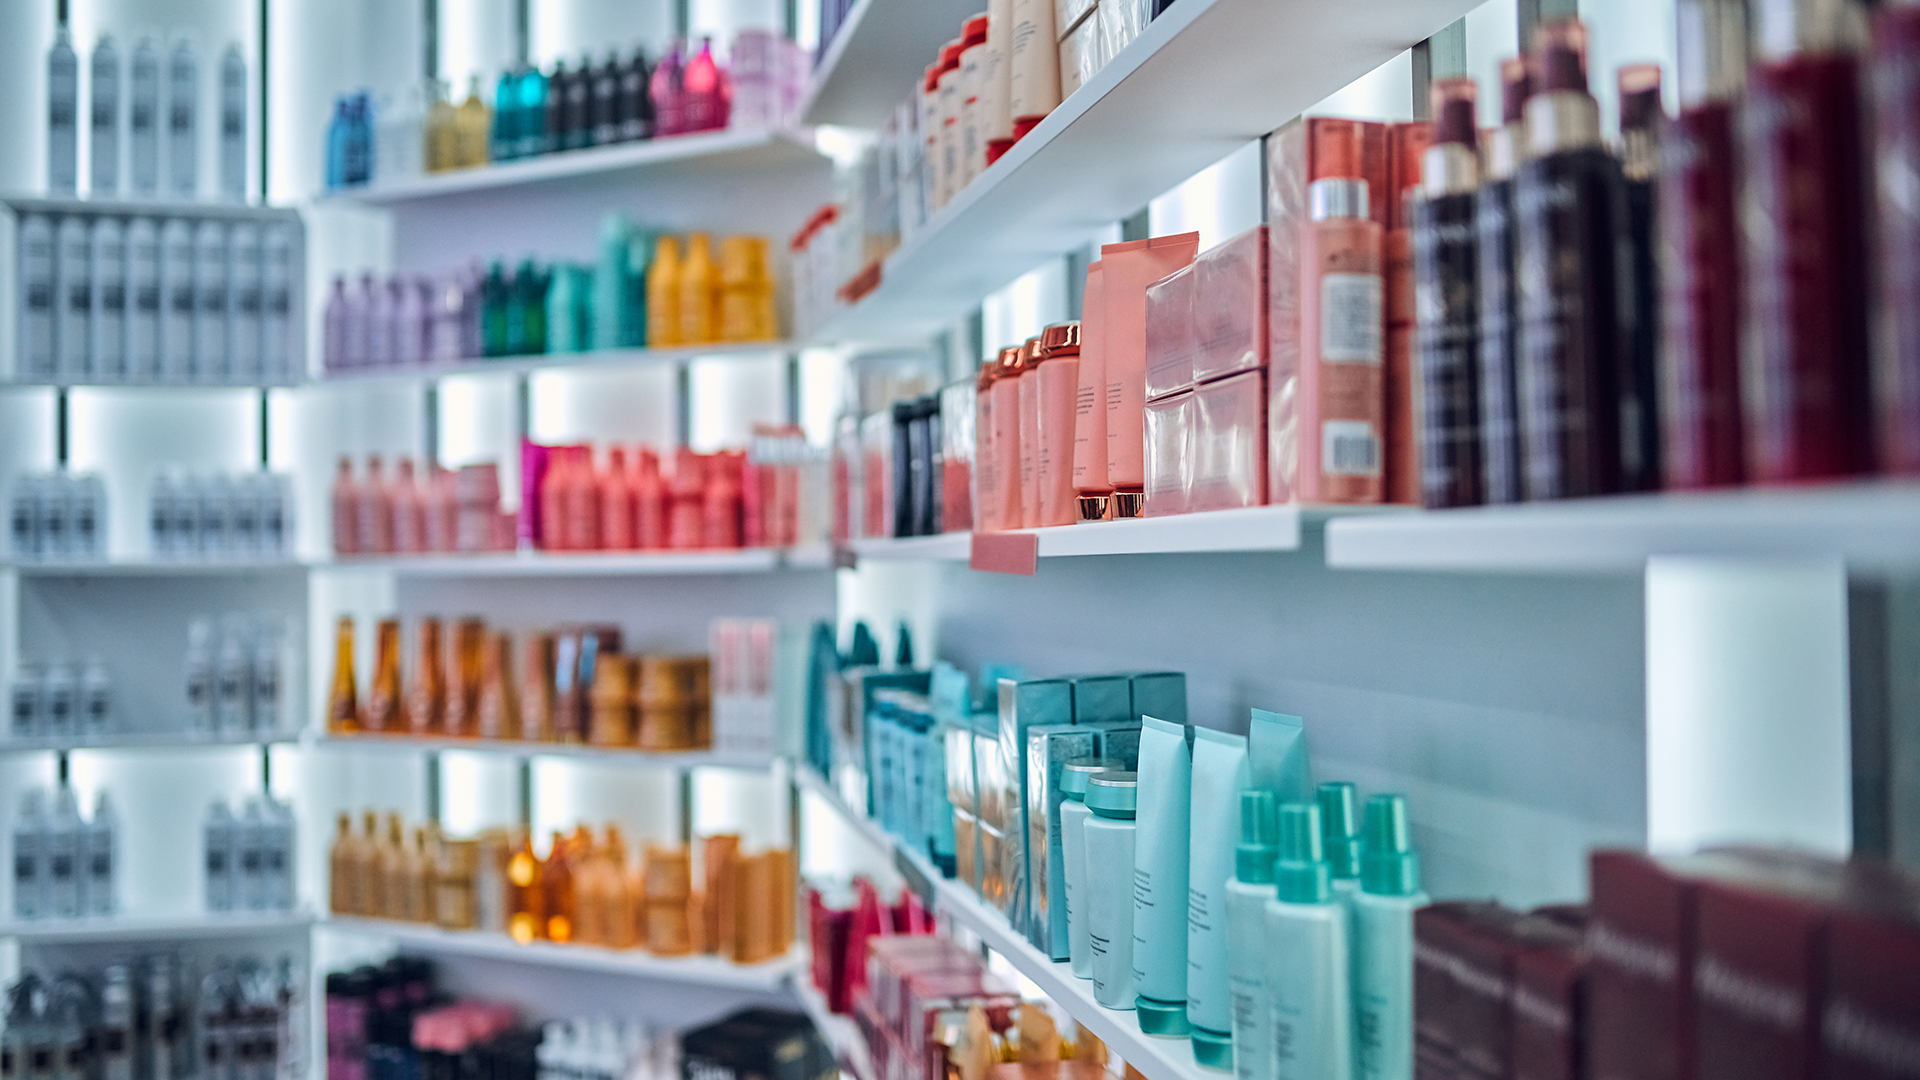 Regulatory amendments concerning the sale of cosmetics in Canada